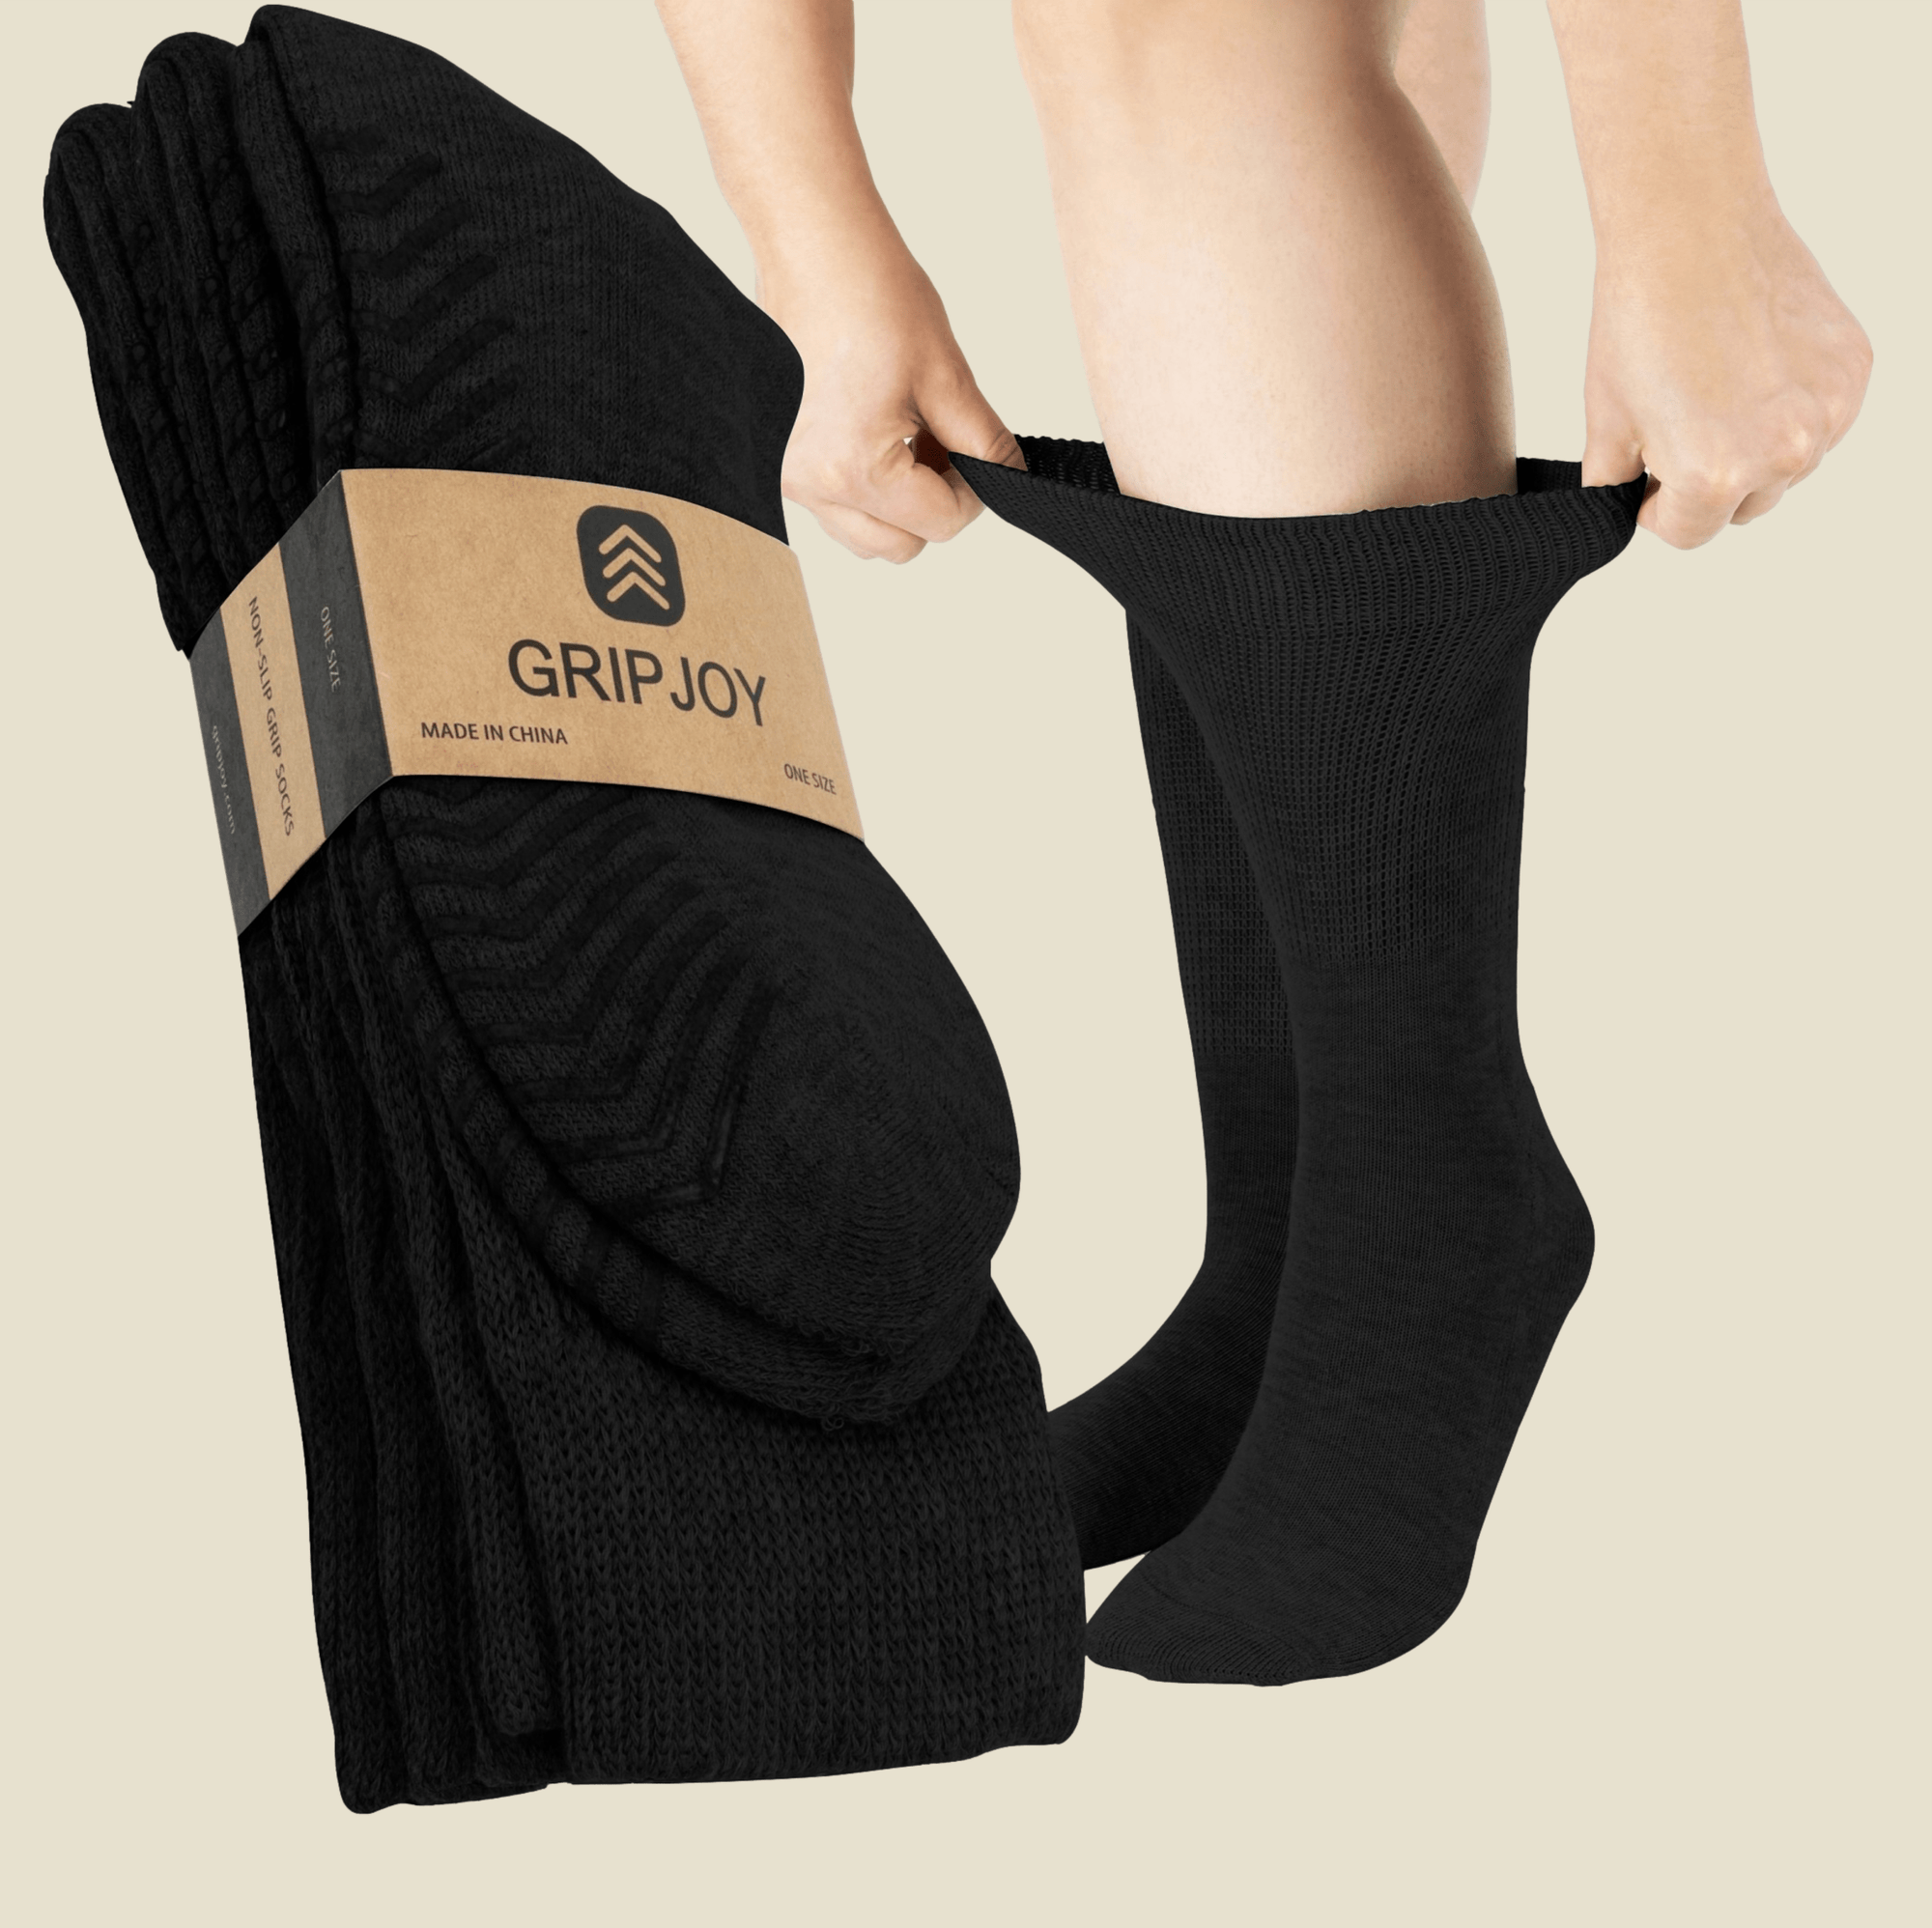 Dark Grey Fuzzy Socks with Grips for Men x2 Pairs